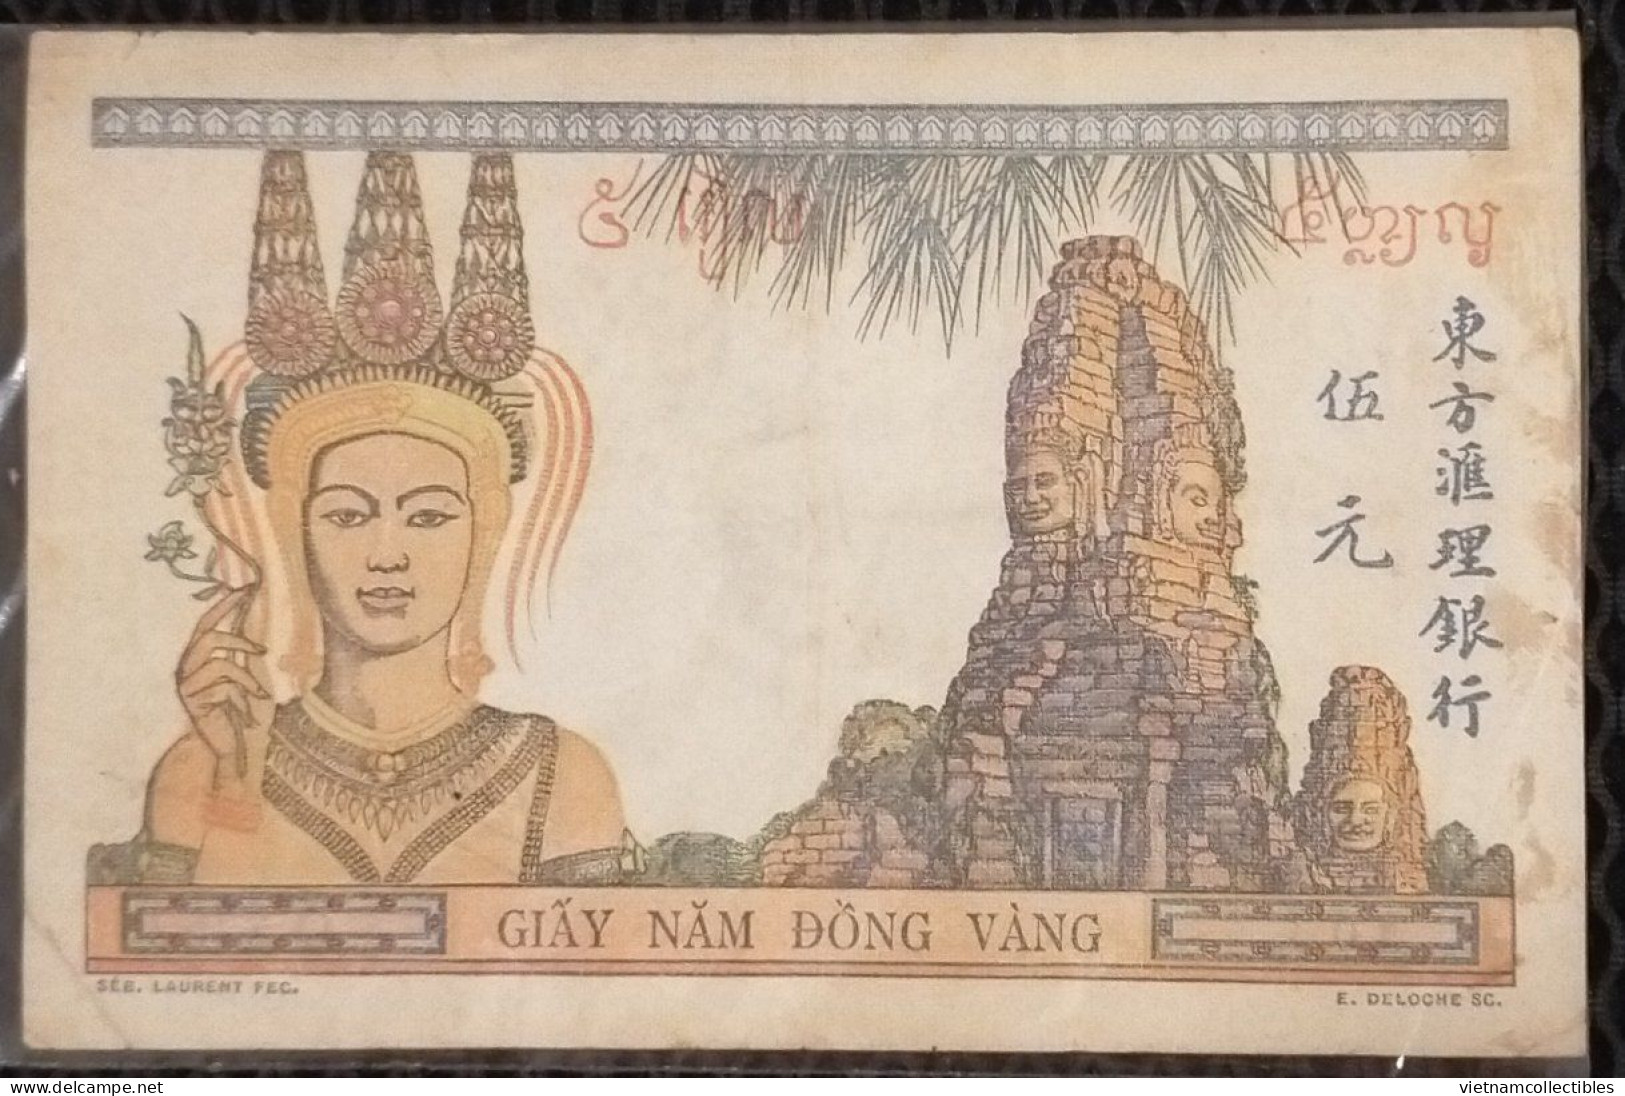 Indochine Indochina Vietnam Viet Nam Laos Cambodia 5 Piastres VF Banknote 1946 - Pick # 55c / 02 Photos - Indochine